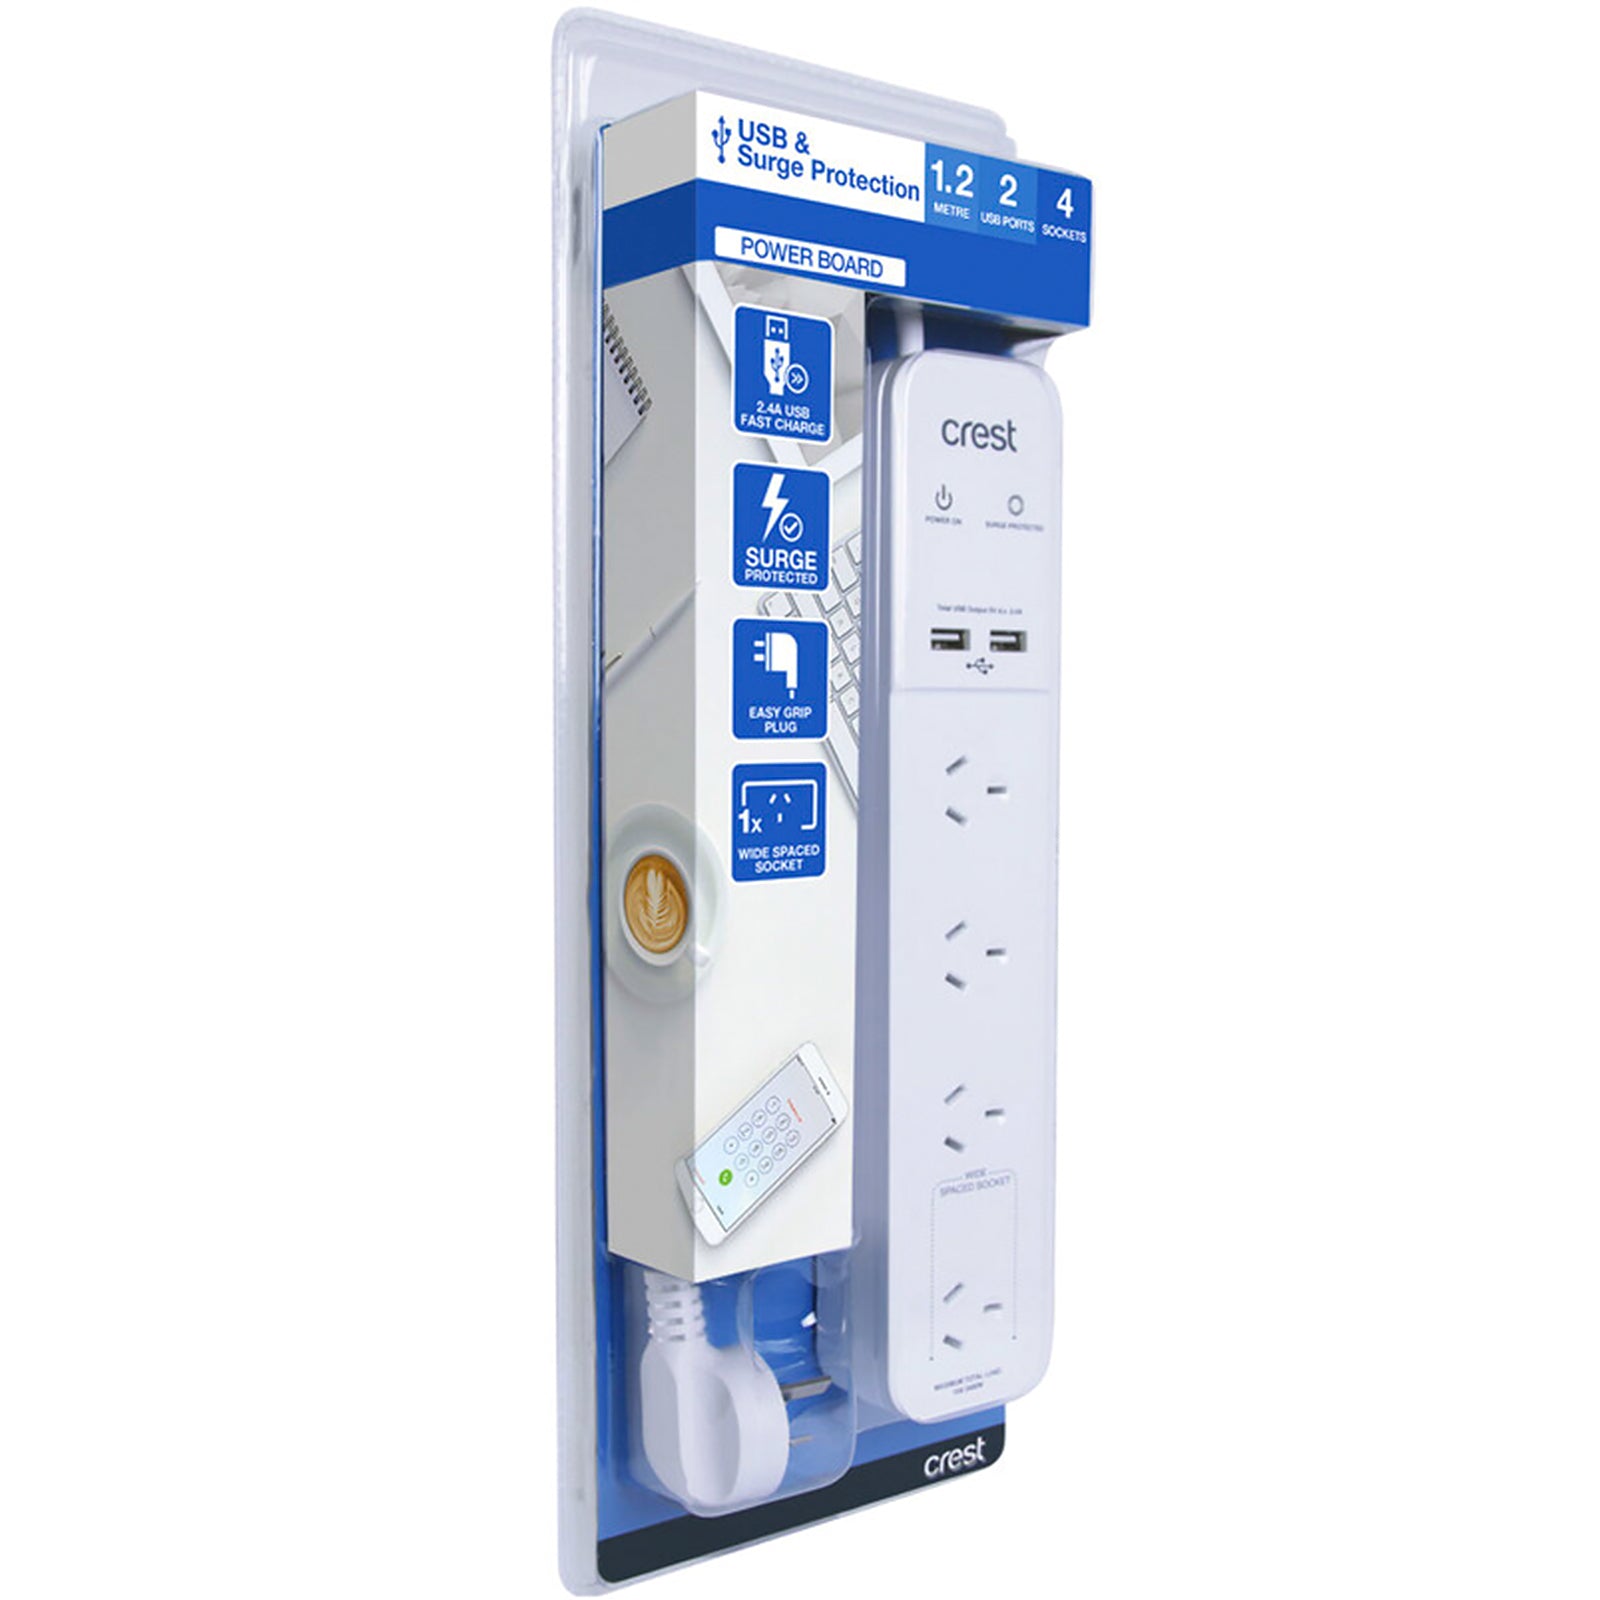 Crest Premium Power Board 4 Socket Surge Protection & 2 USB Fast Port